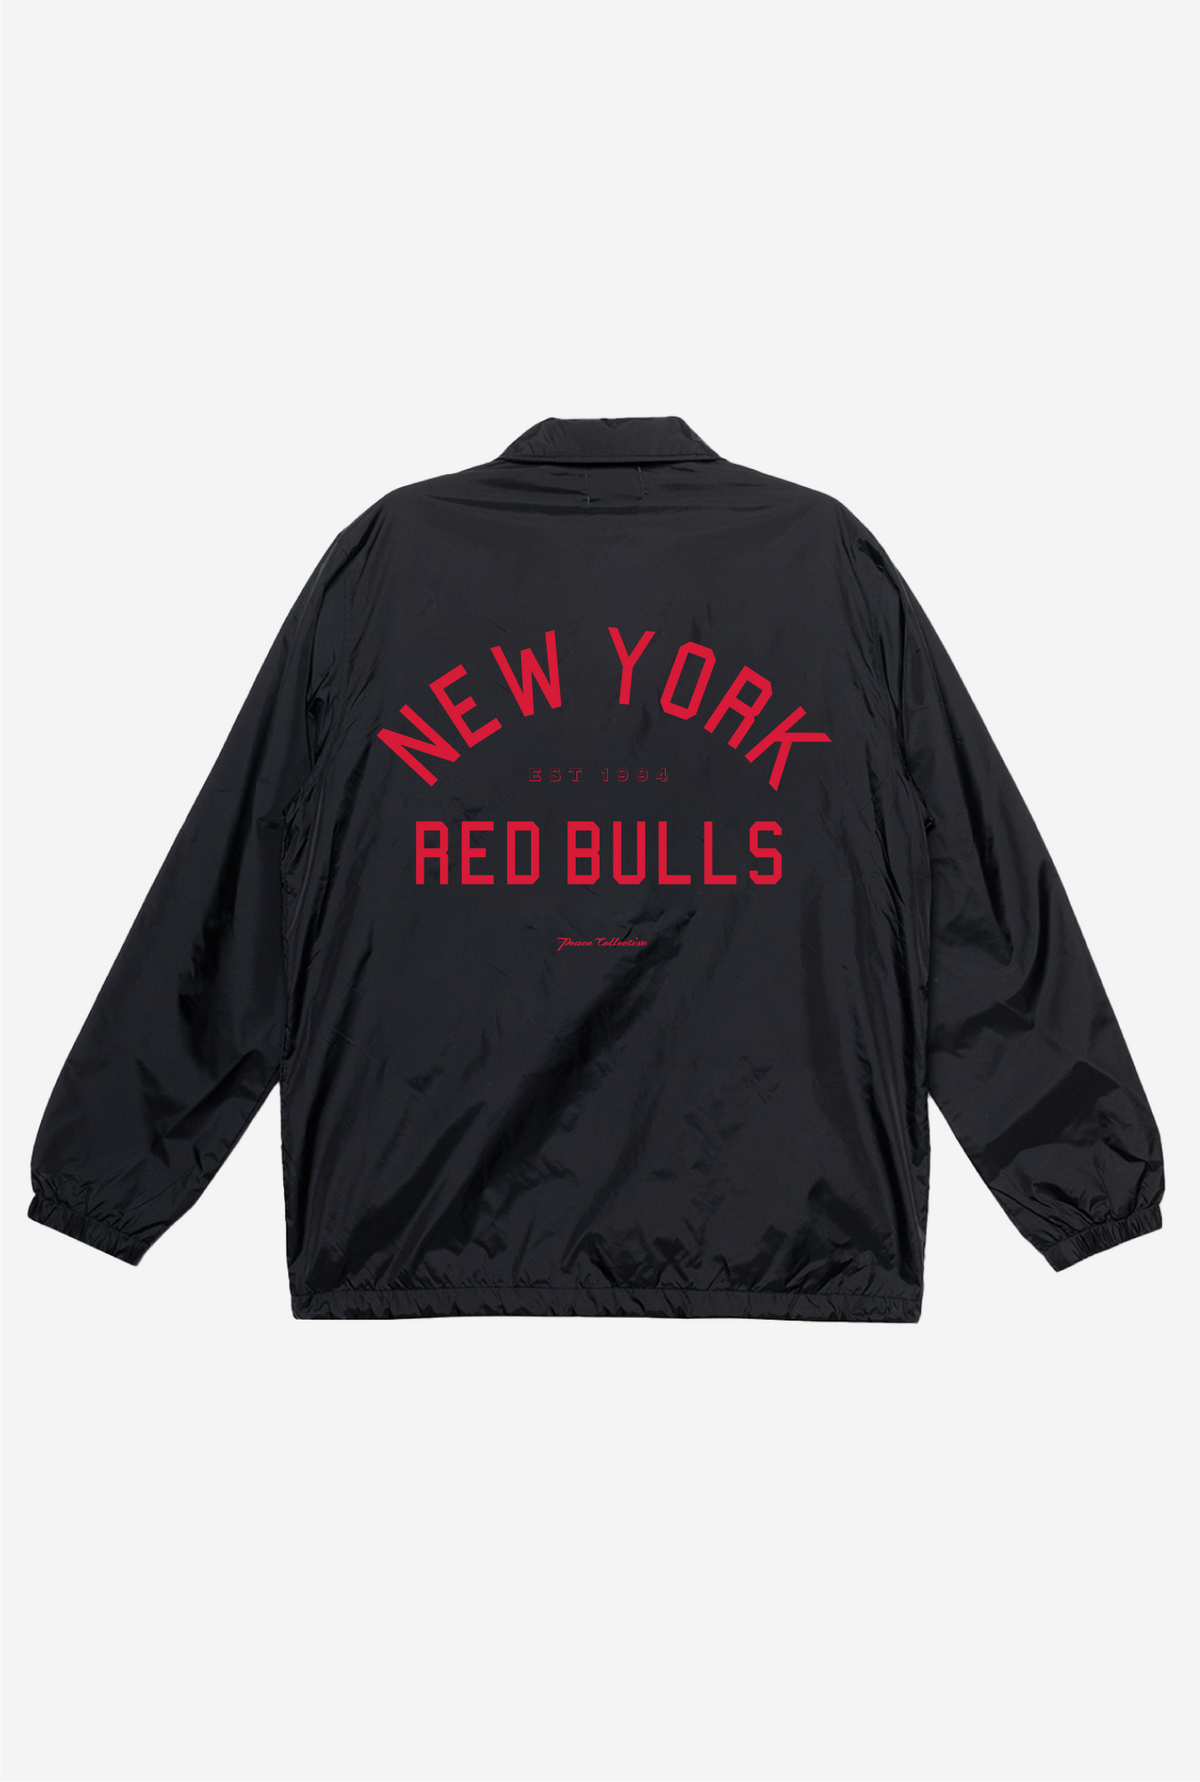 New York Red Bulls Coach Jacket - Black